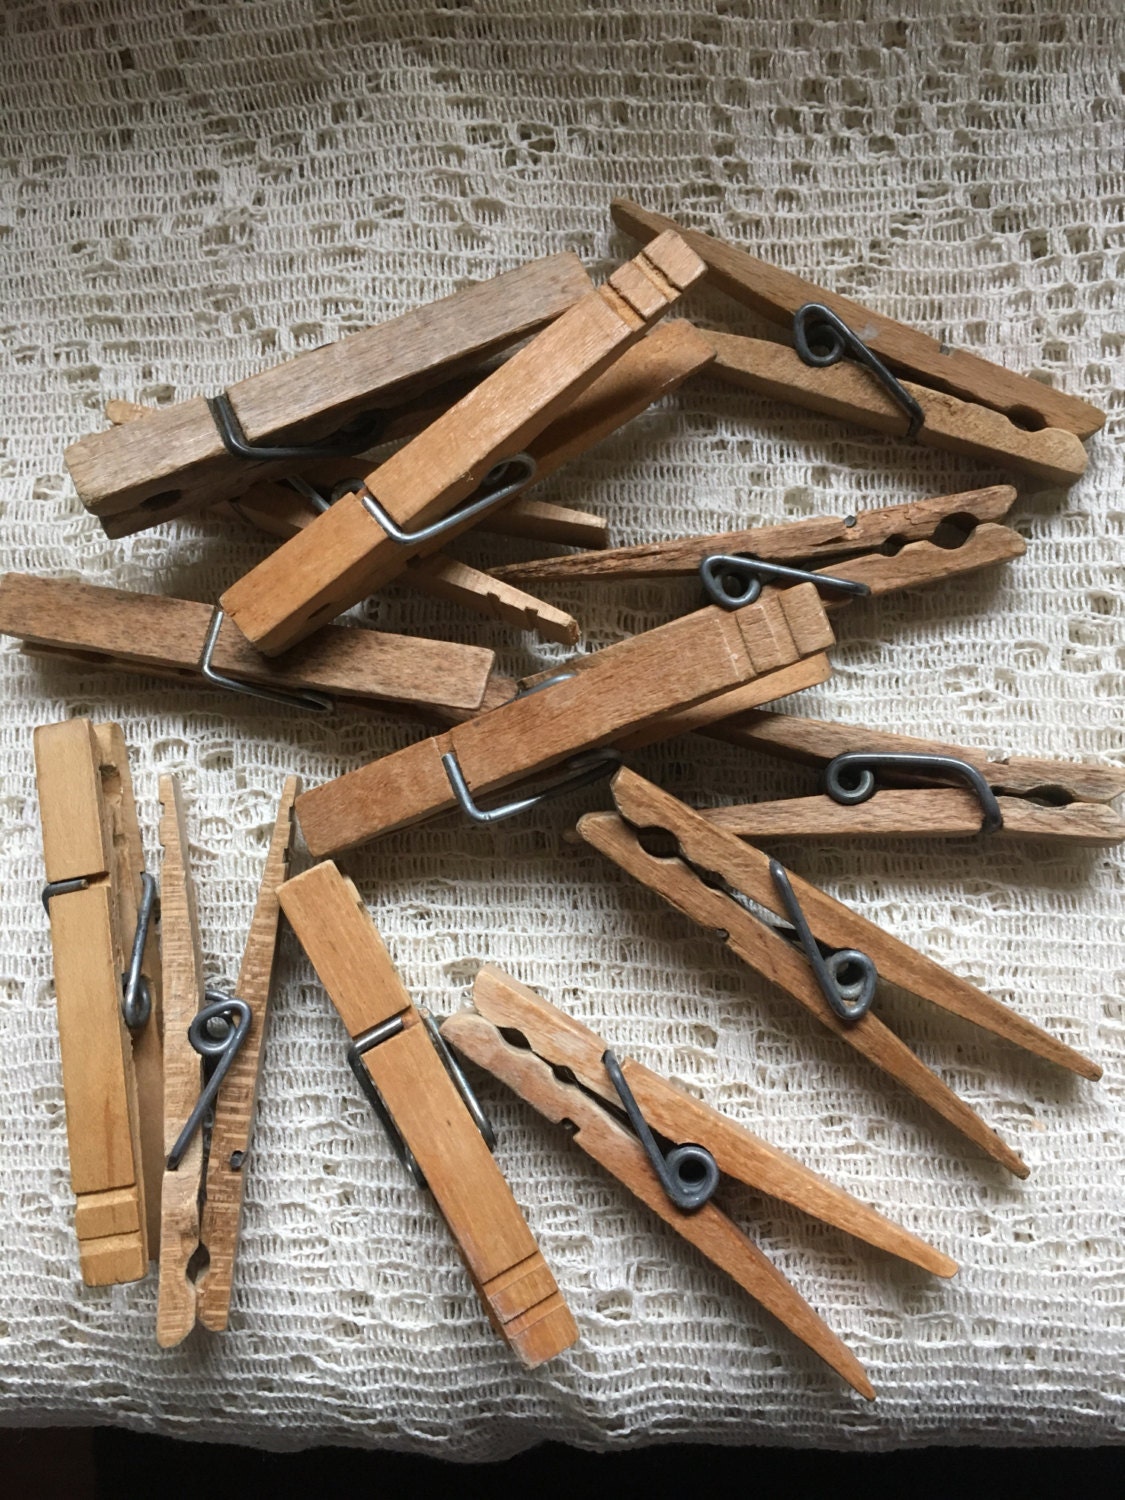 100 Mini Clothespins, Wood Clothespins, Gold, Tiny Clothespins, Clothes  Pegs, Small Clothespin, 1 Clothespin, Crafts Supplies Diy 